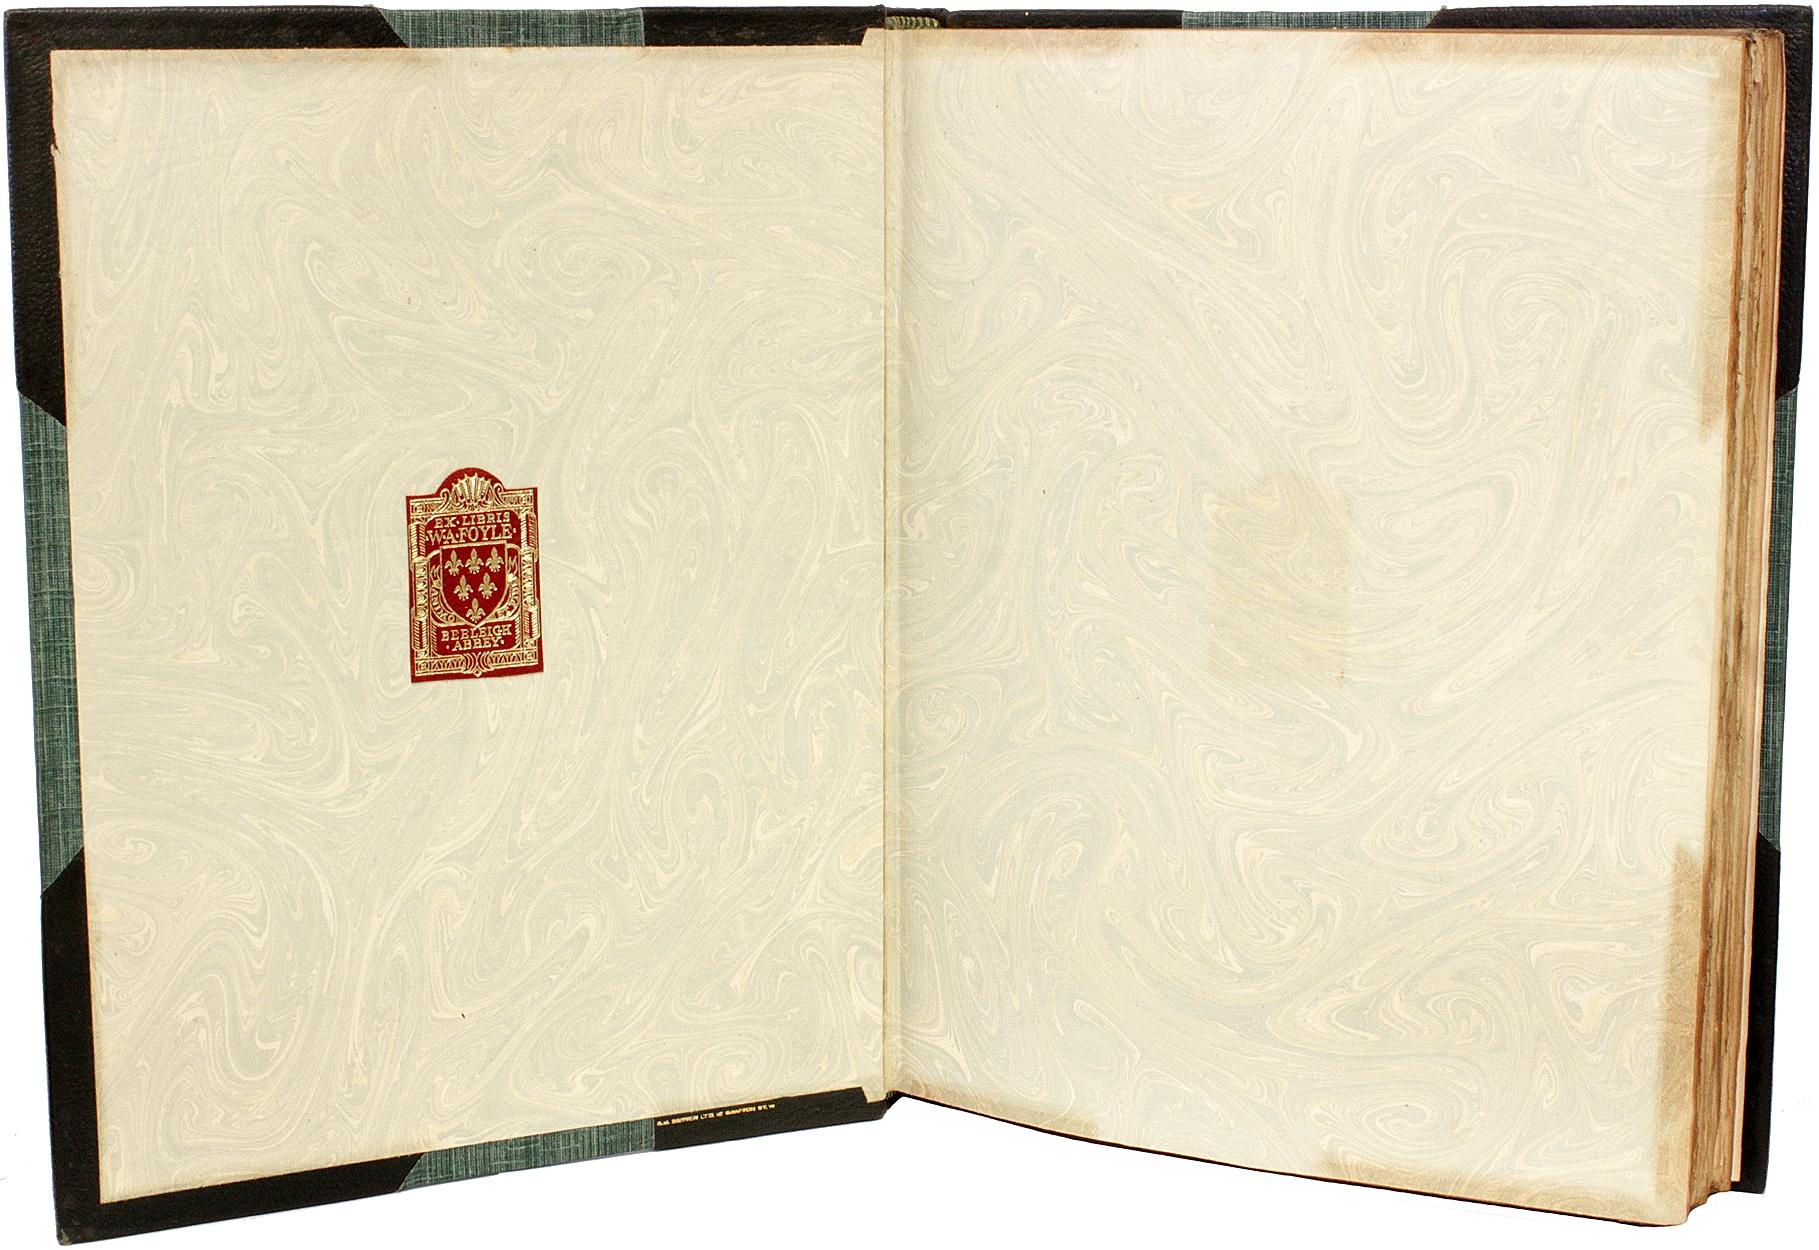 Leather Memoirs Of Giocomo Casanova. 12 vols. - 1922 - LTD EDITION - IN A FINE BINDING! For Sale